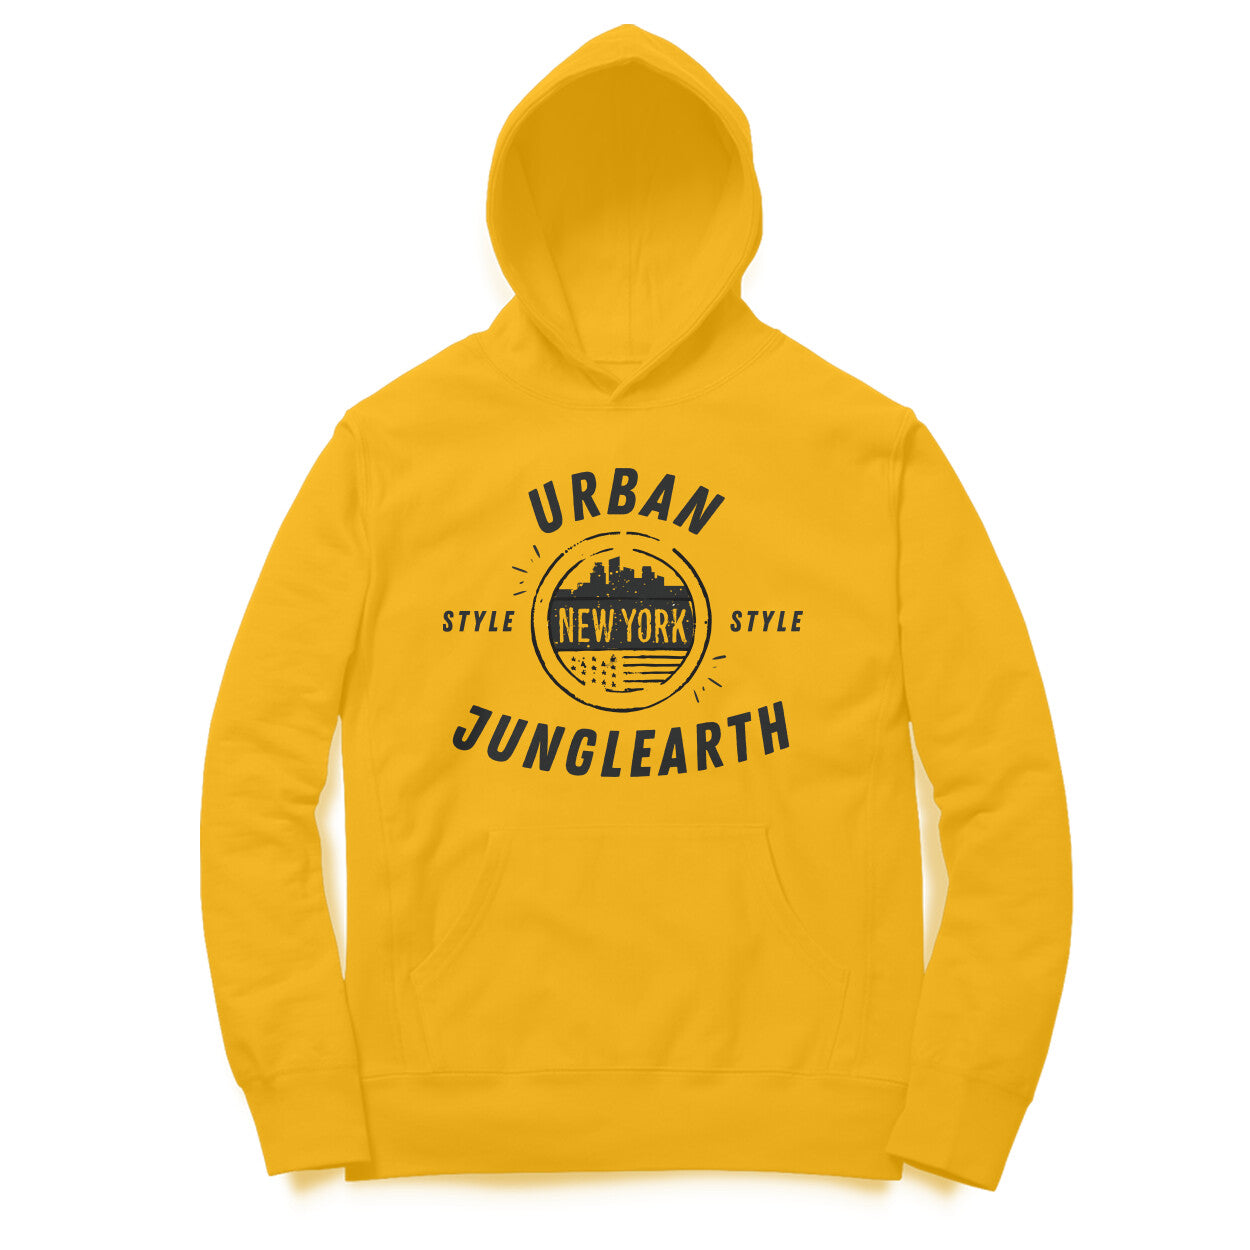 Junglearth Urban style Hoodie